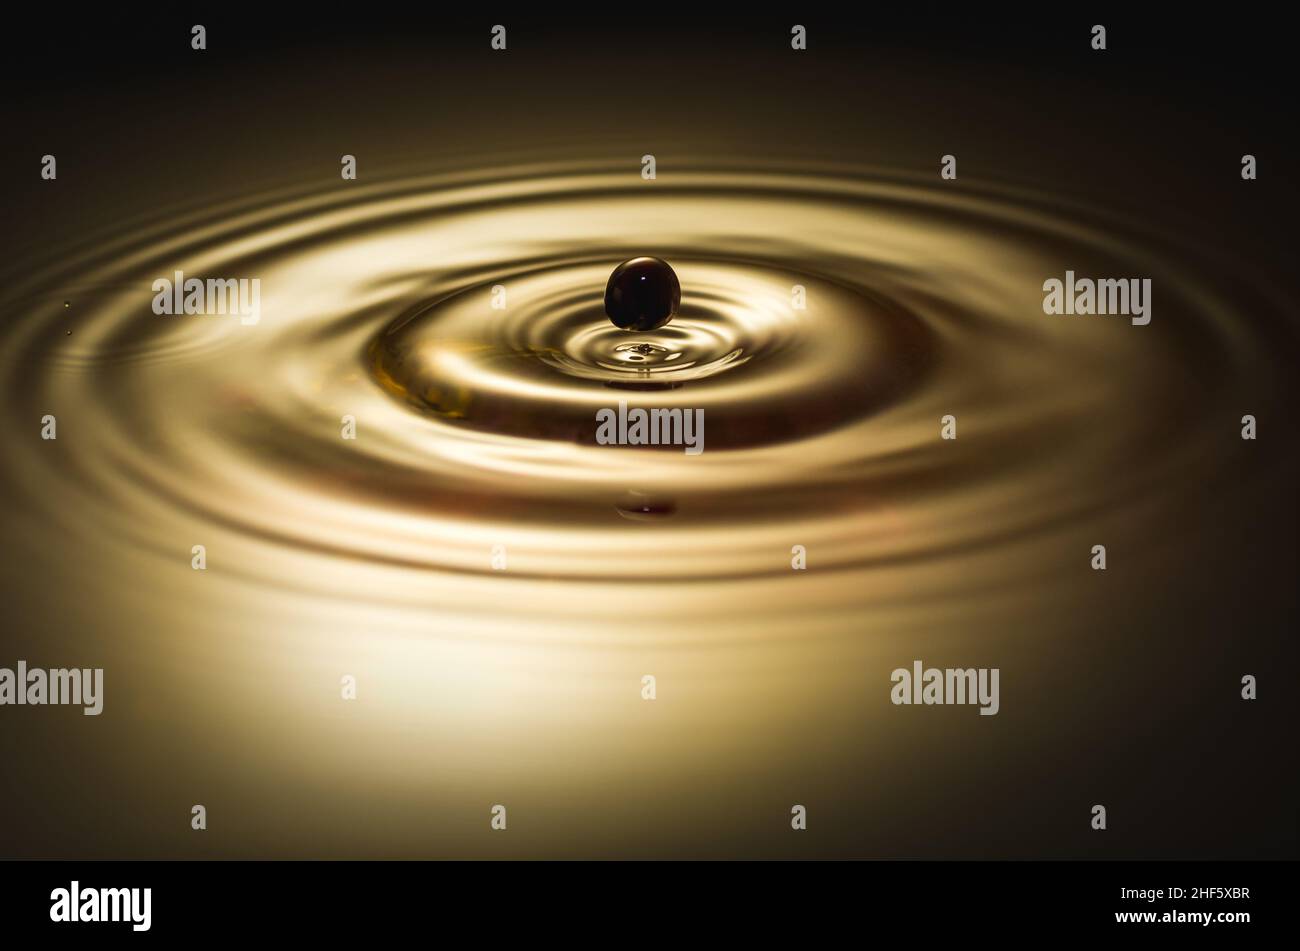 Black drop falls into the water and creates circles Stock Photo